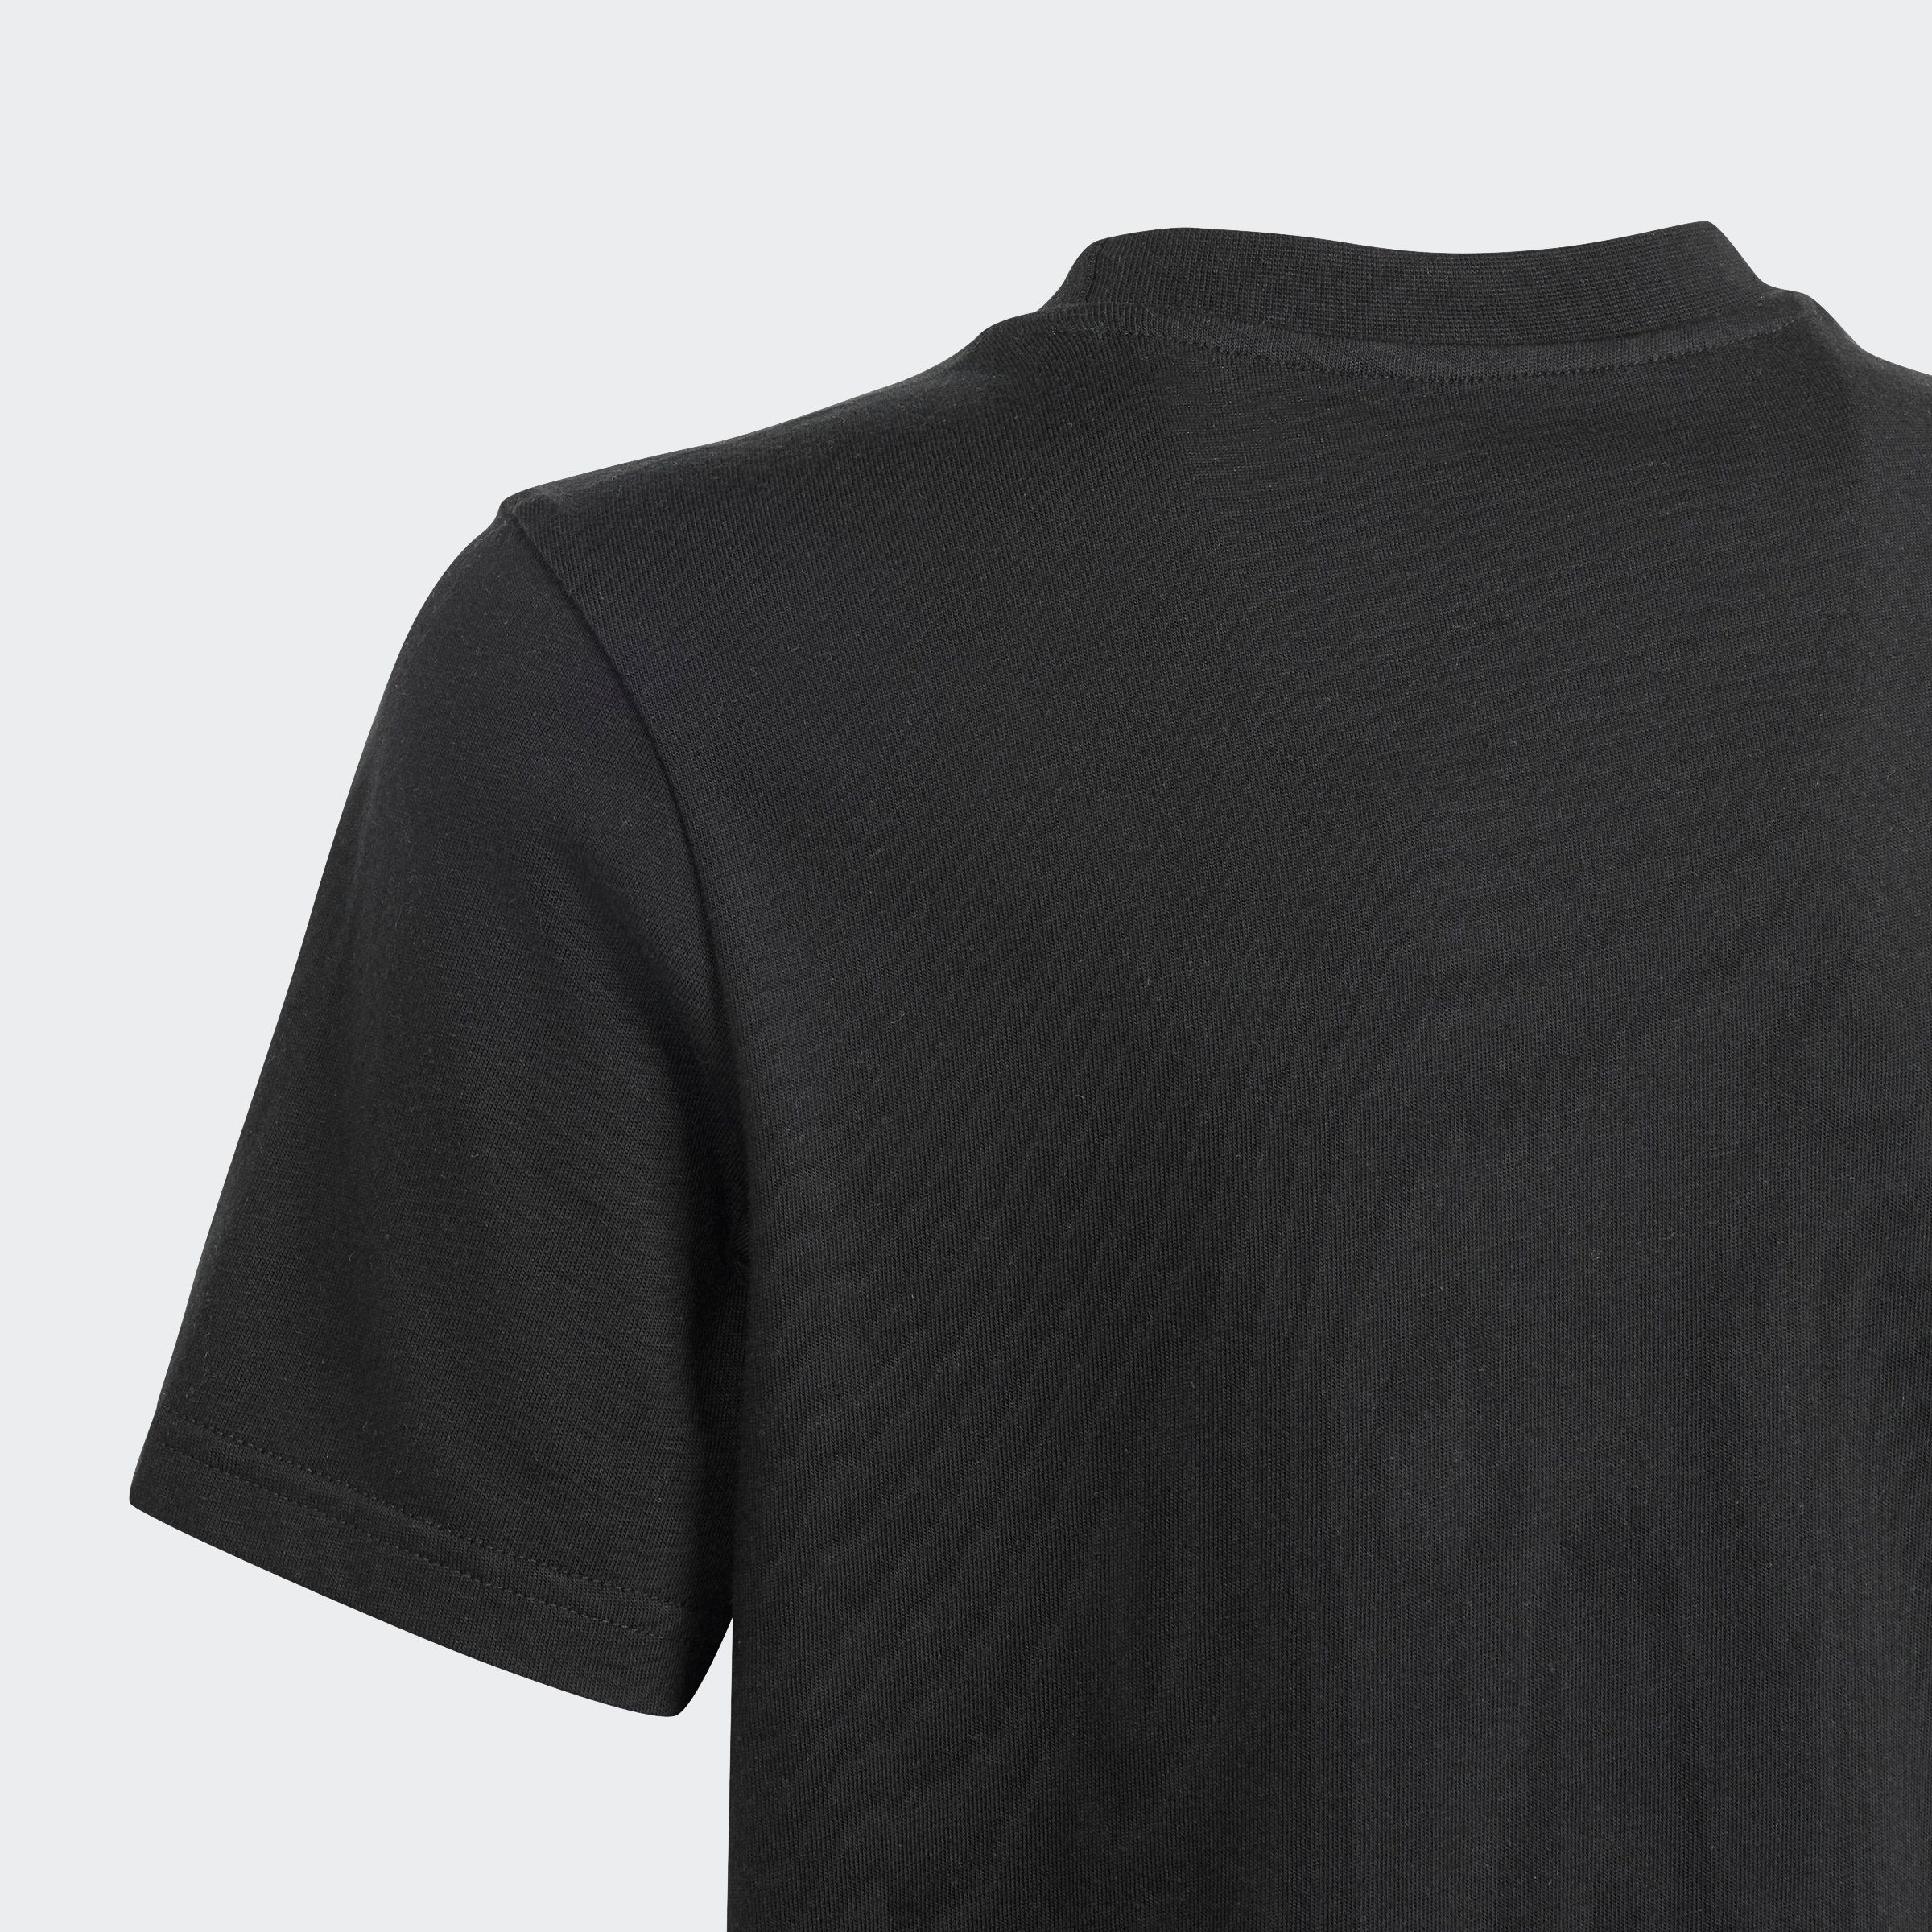 T Sportswear T-Shirt adidas BLACK CAMO LIN B